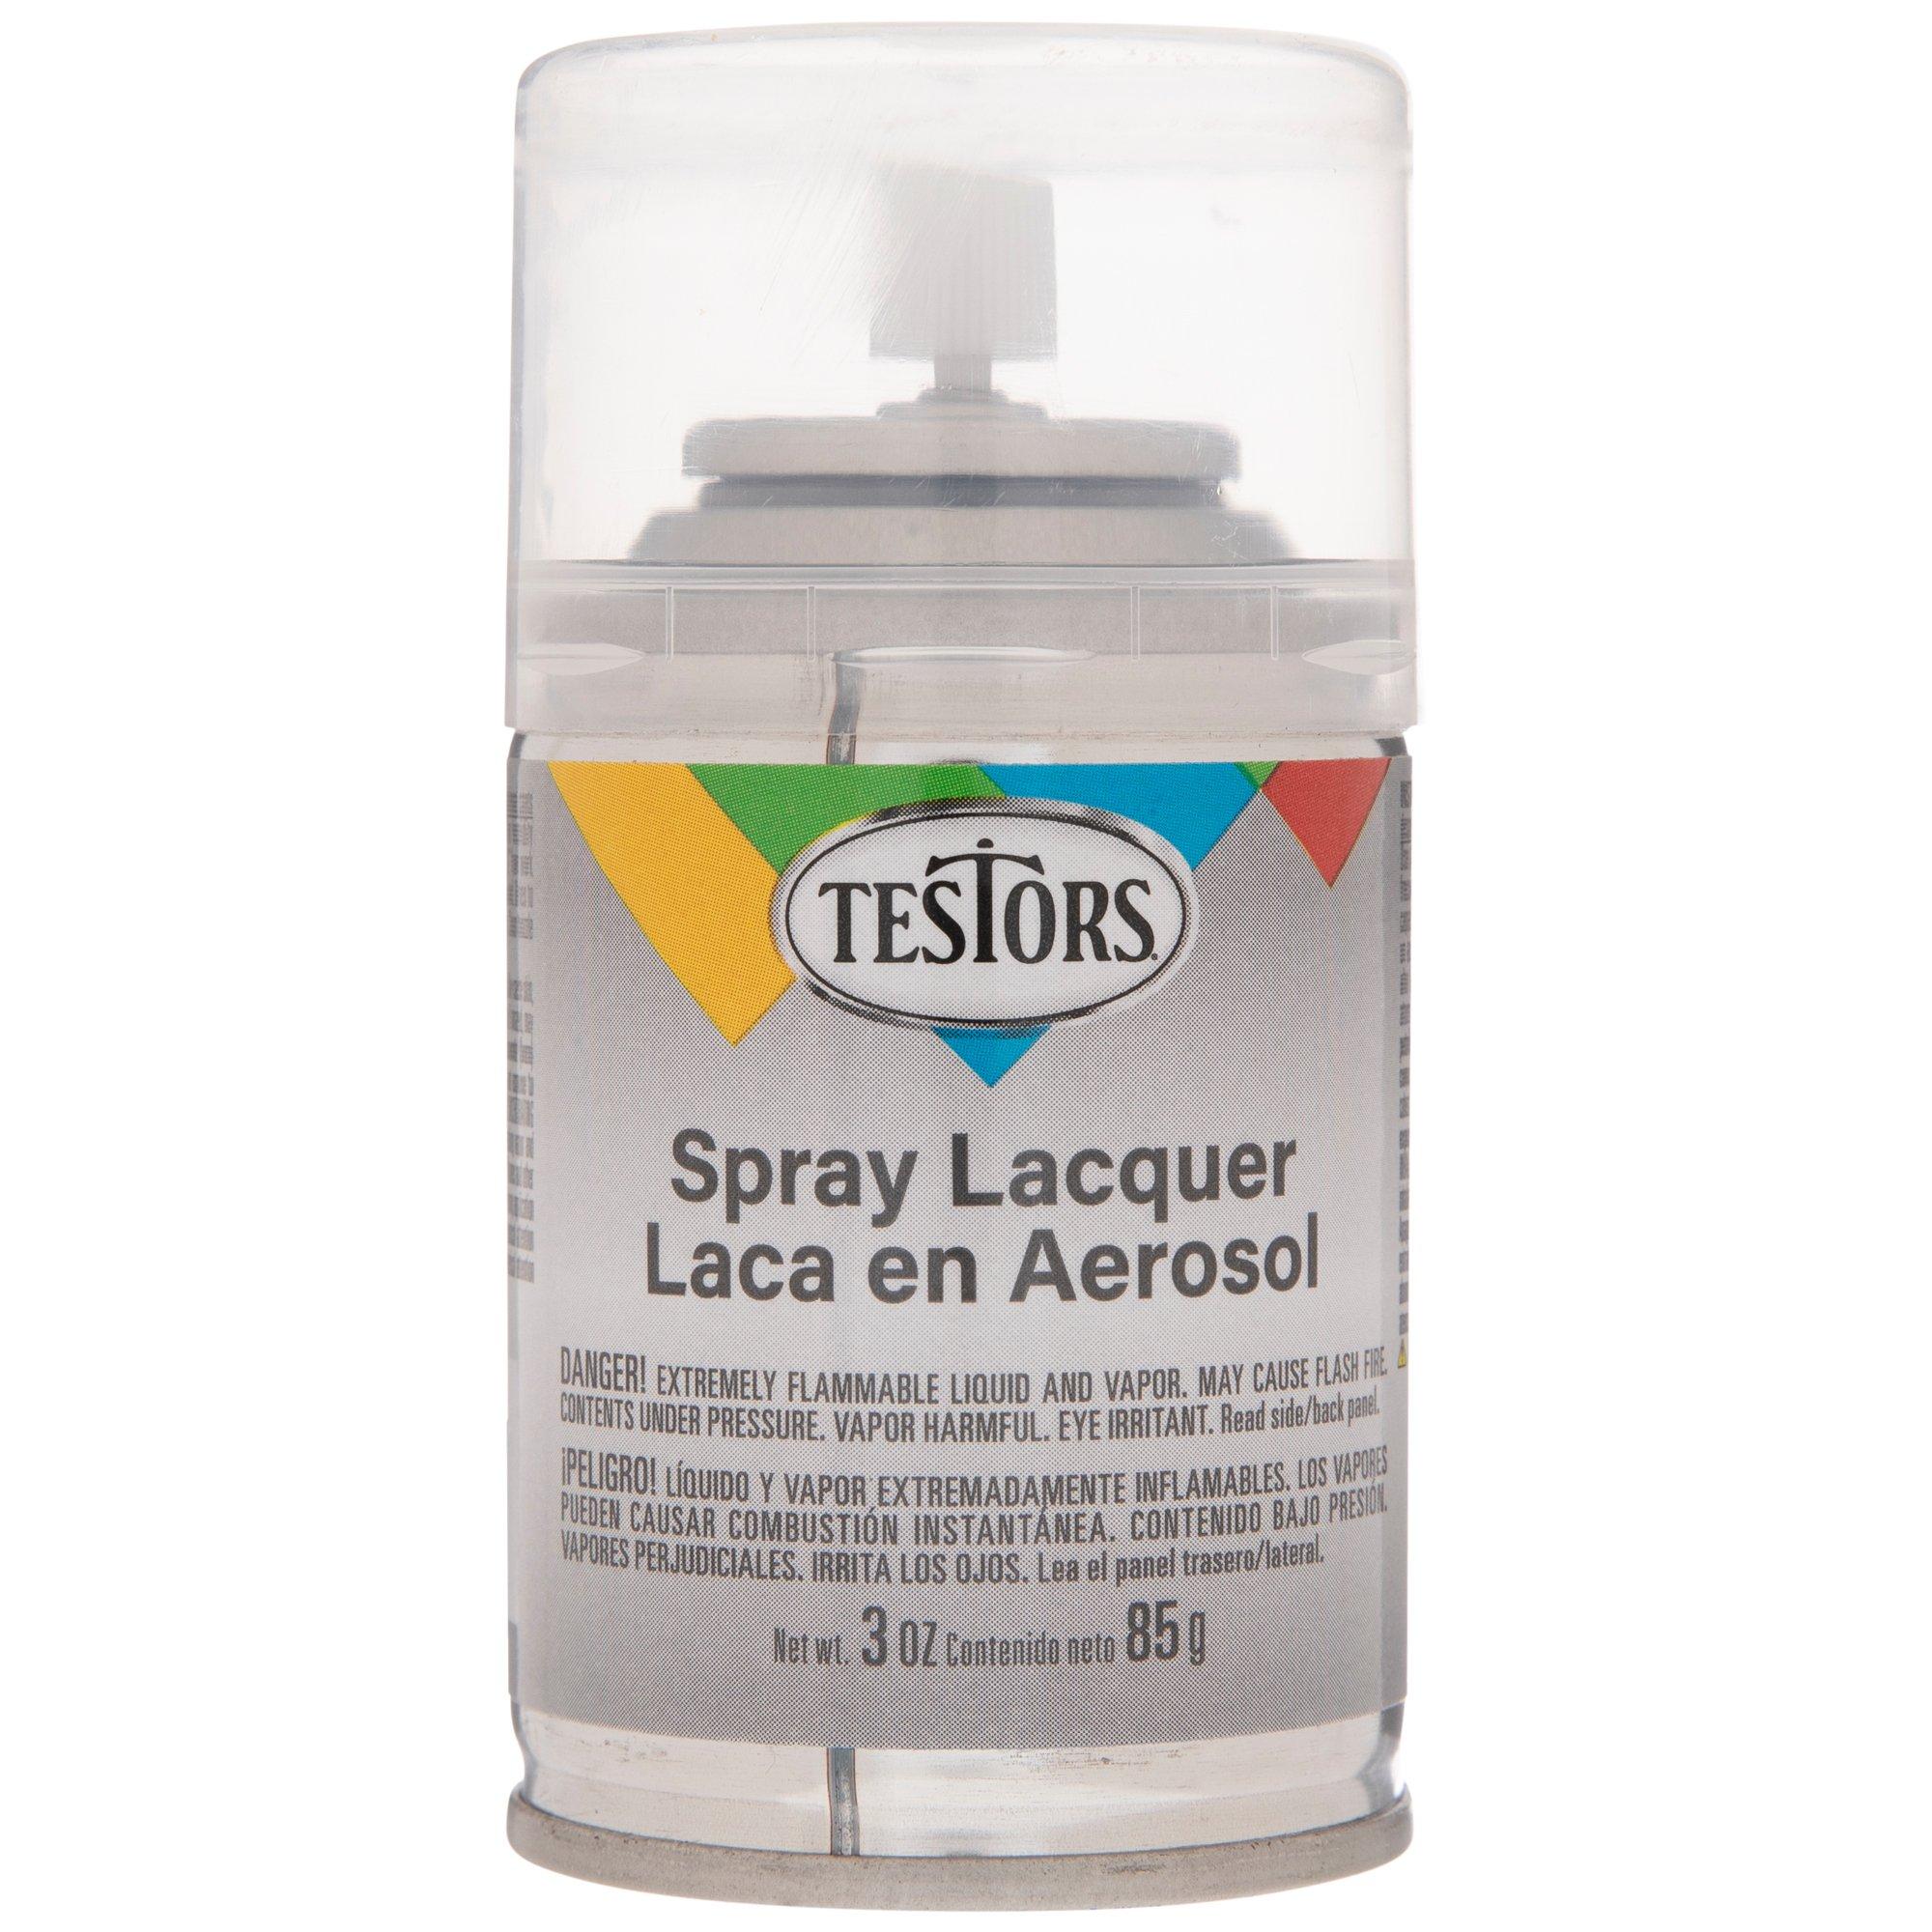 New Testors Lacquer sprays : r/minipainting